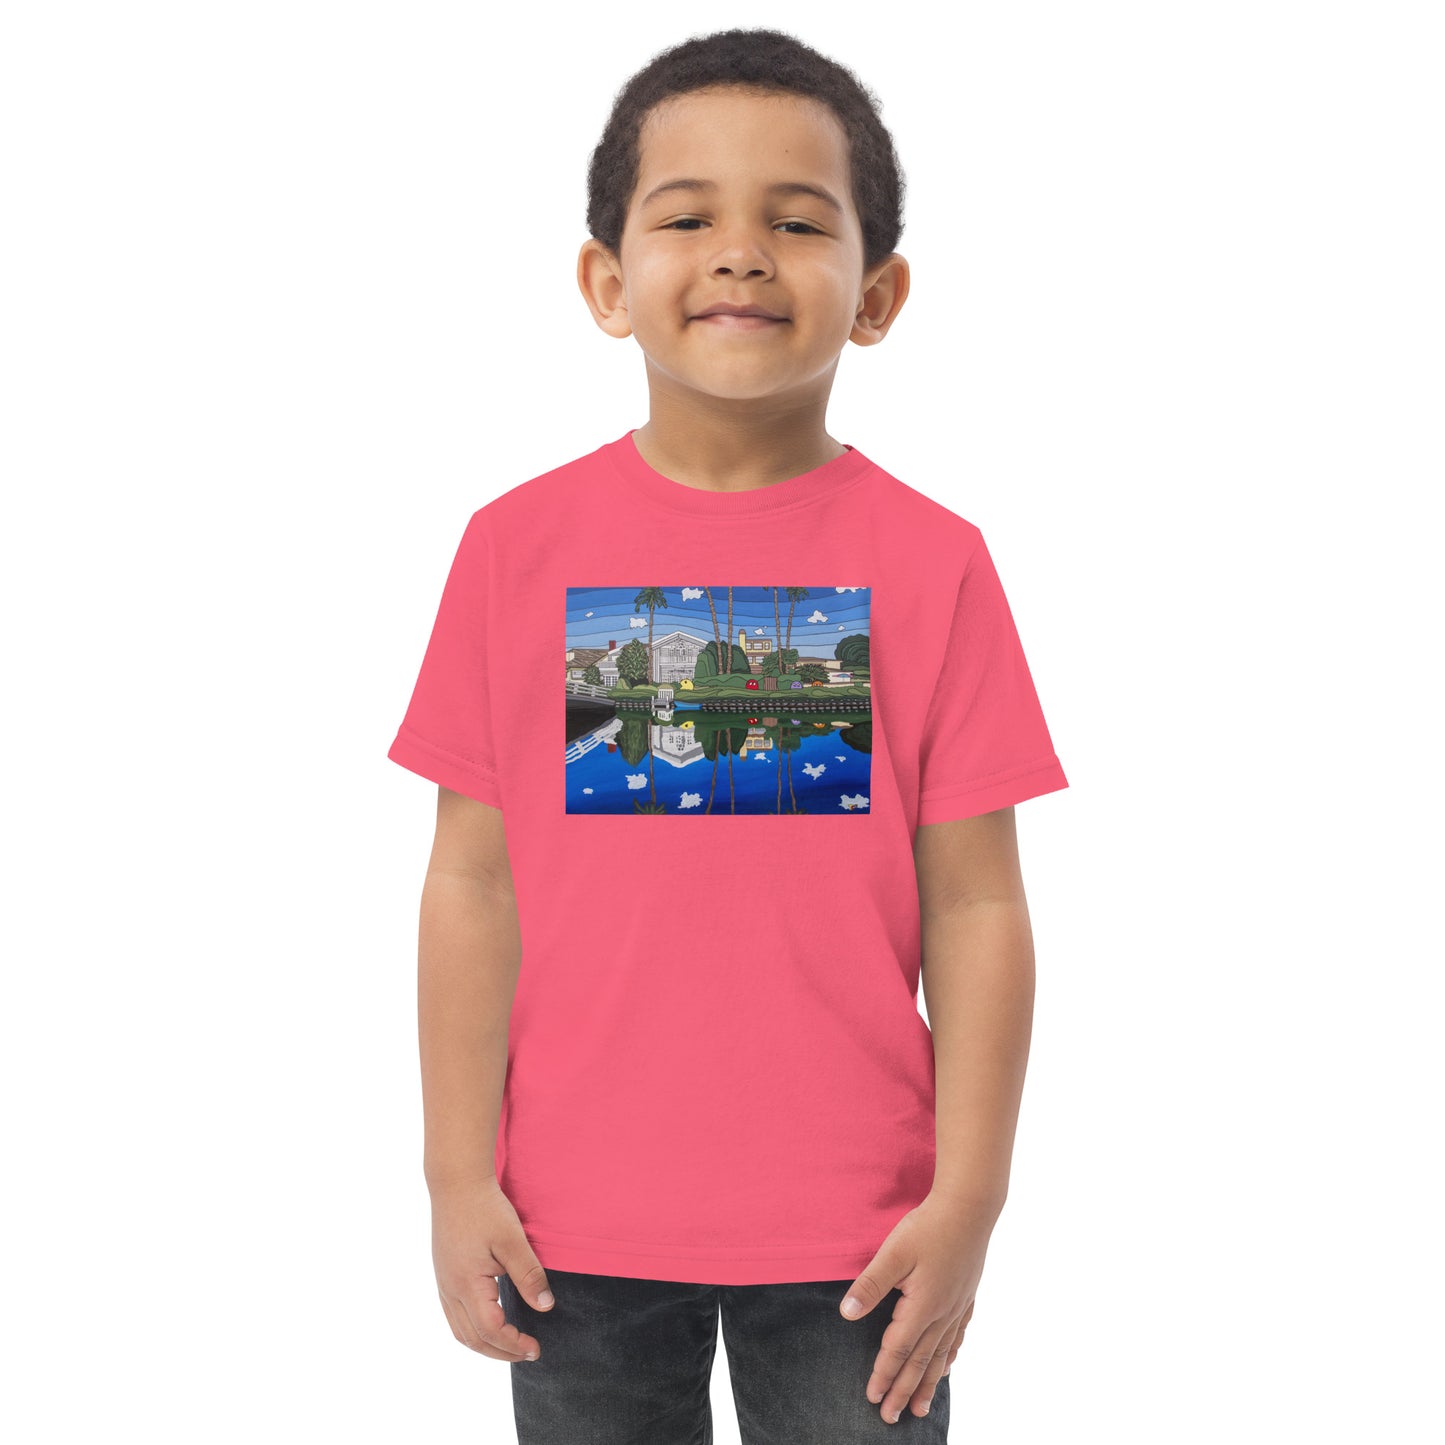 Venice Canals 2 - Toddler jersey t-shirt